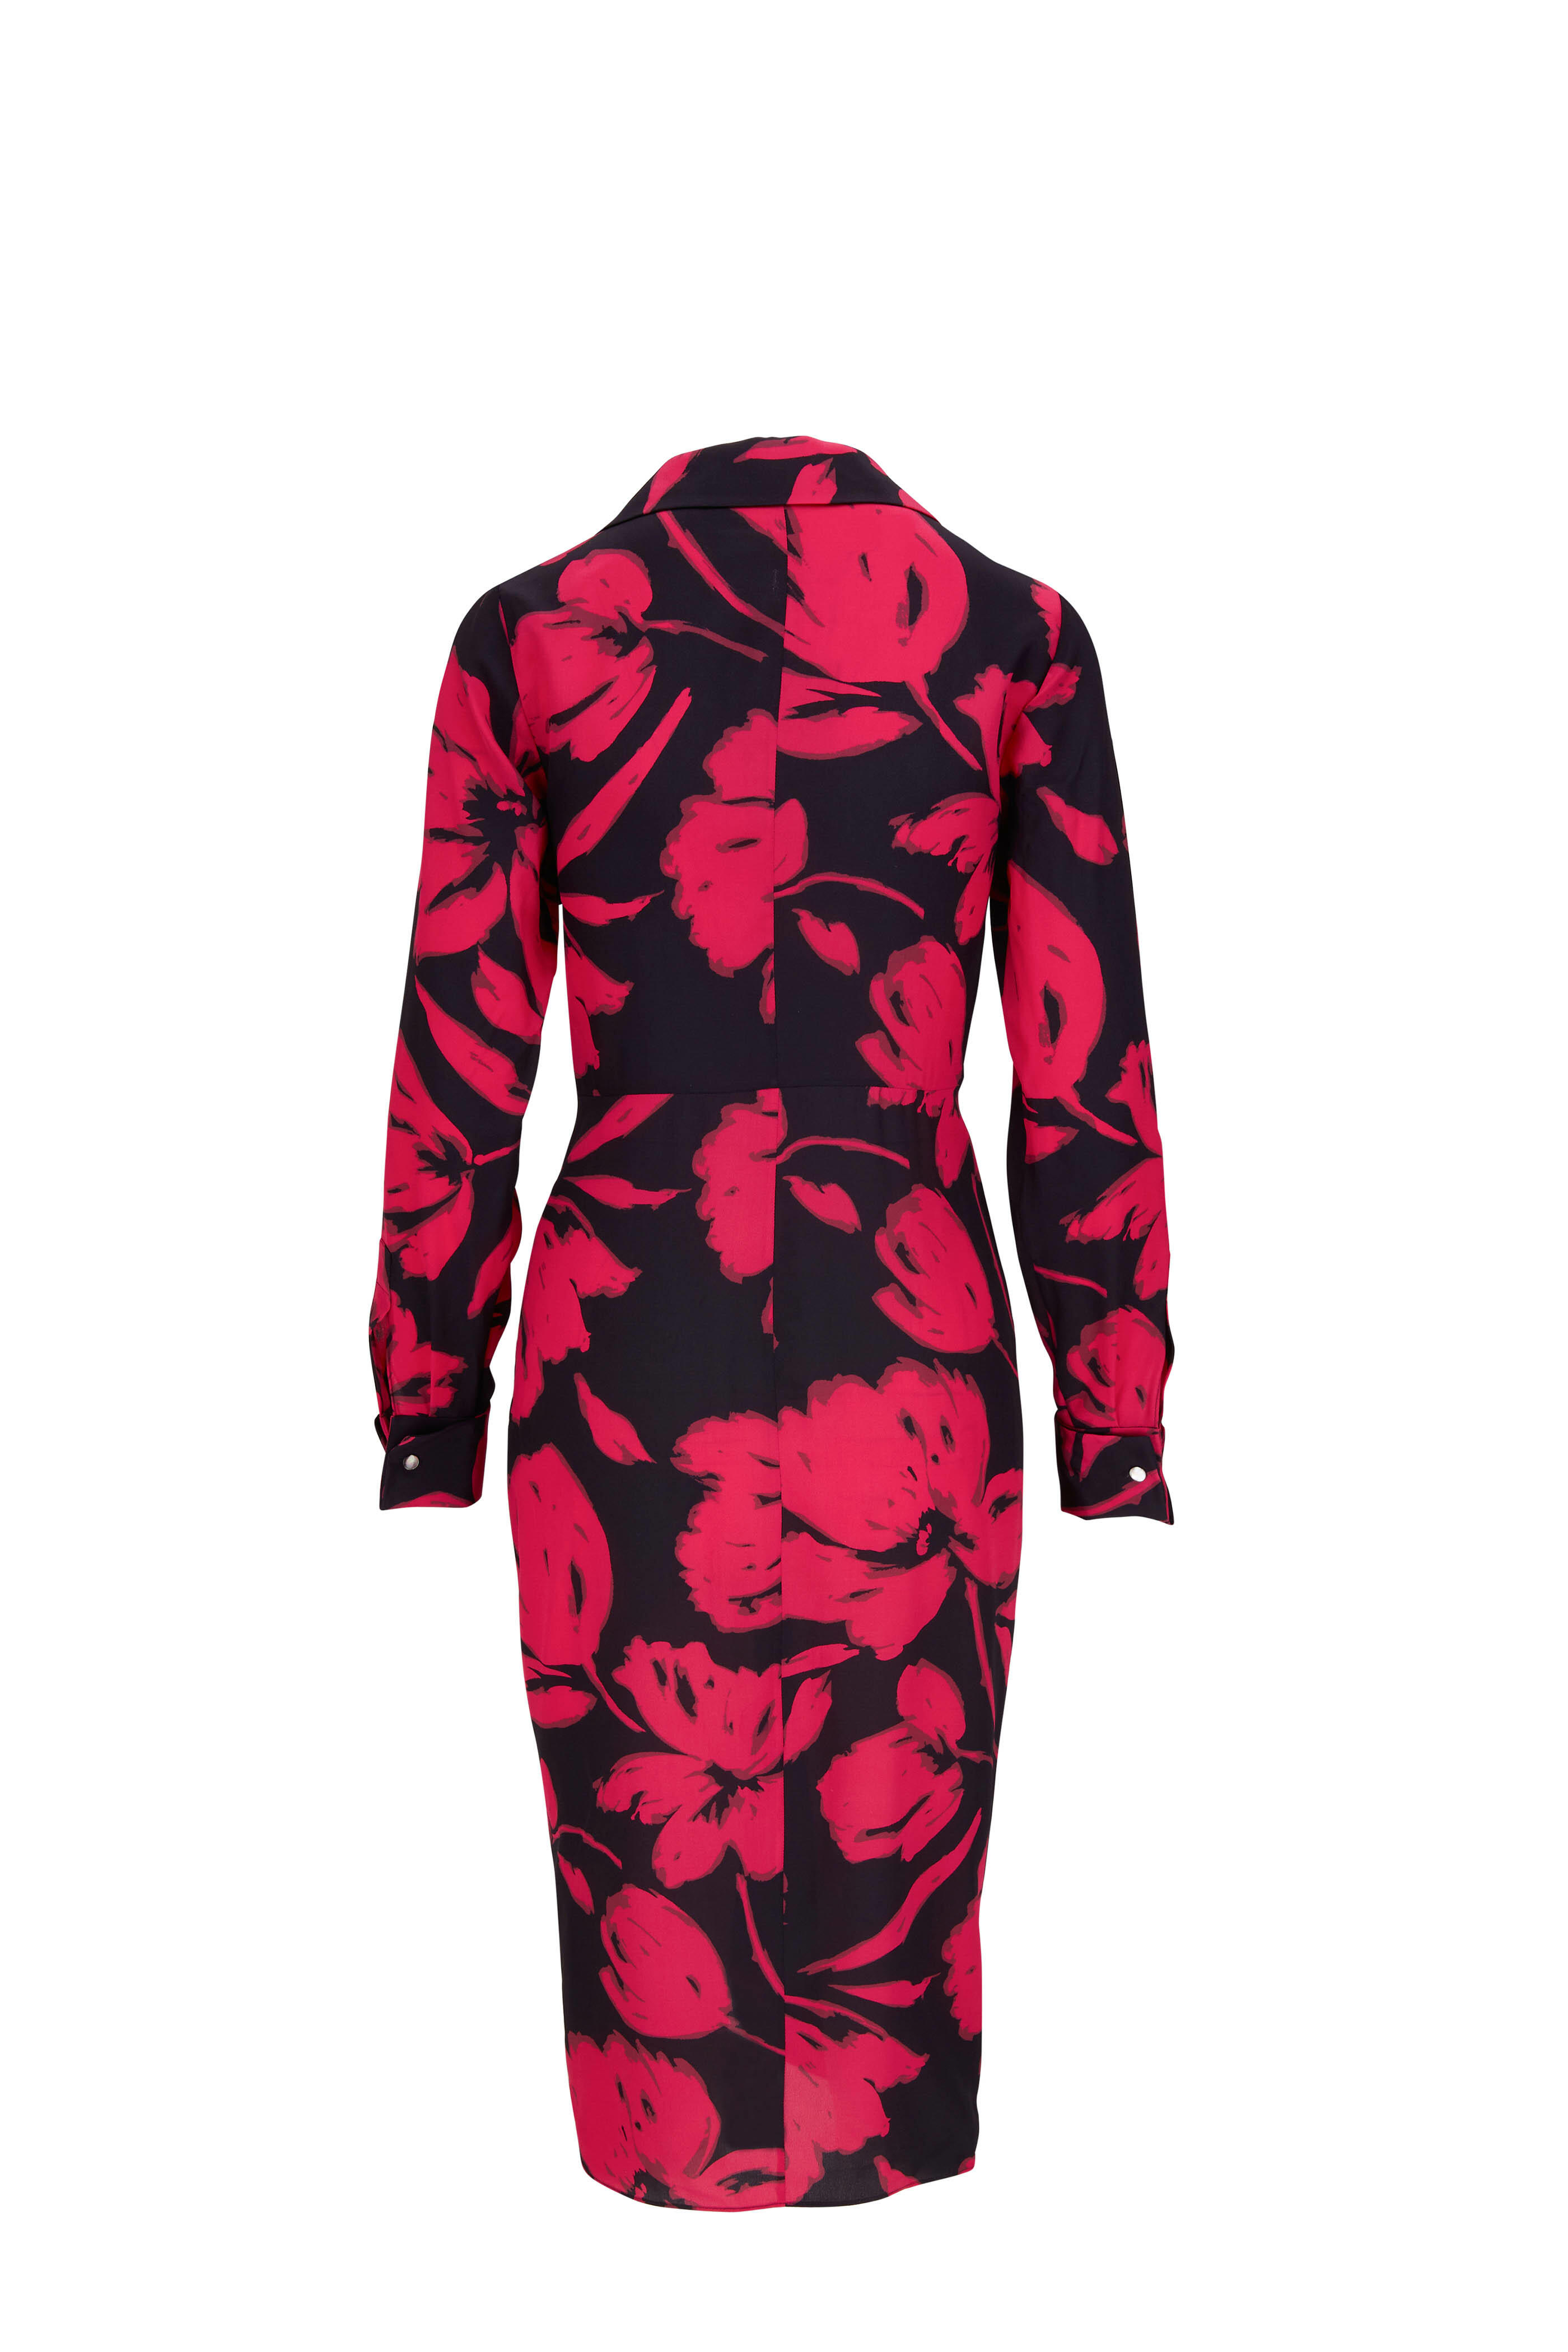 Michael Kors Collection - Pink & Black Long Sleeve Gathered Shirt Dress